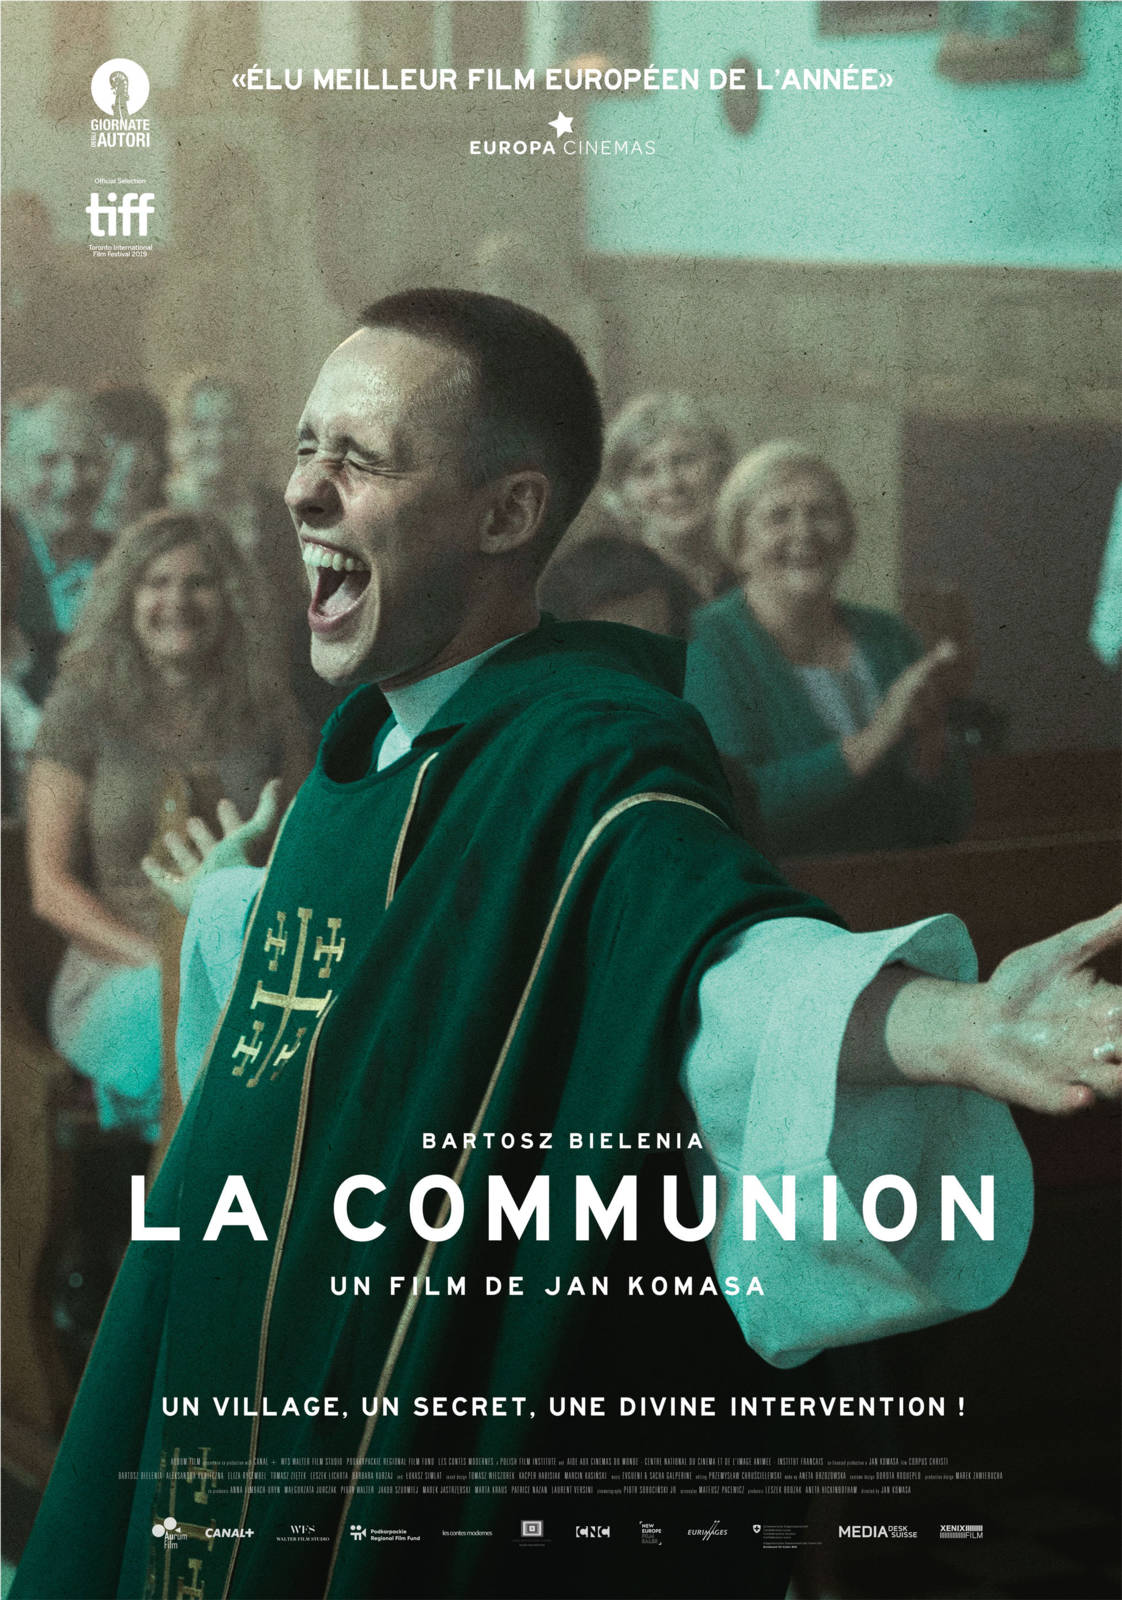 CINÉMA : "La communion" (Corpus Christi) un film âpre et lumineux (Audio - Critique de cinéma + Vidéo - 1 min) F9c912d4dad8d70f04cd92944b096cb9363e93ca